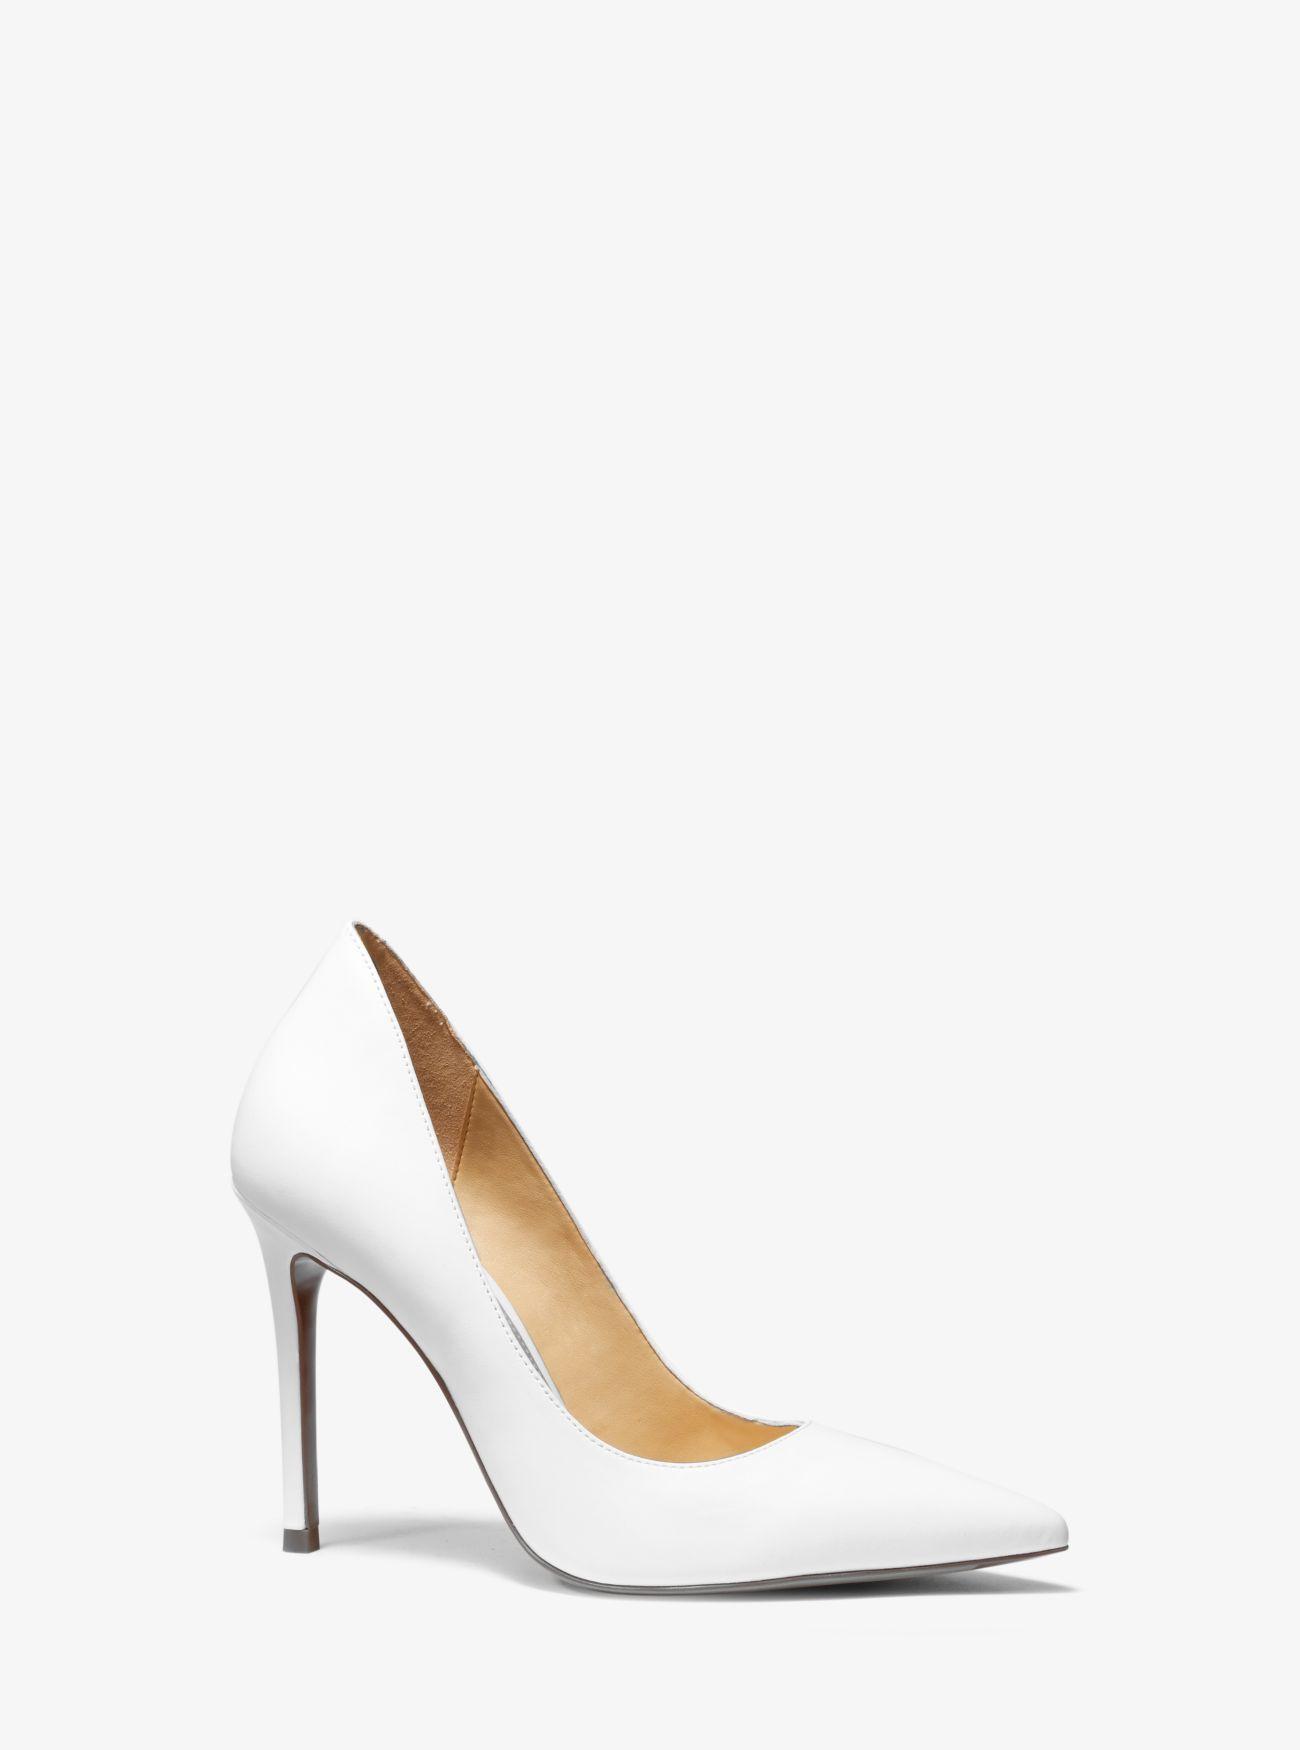 michael kors white high heels